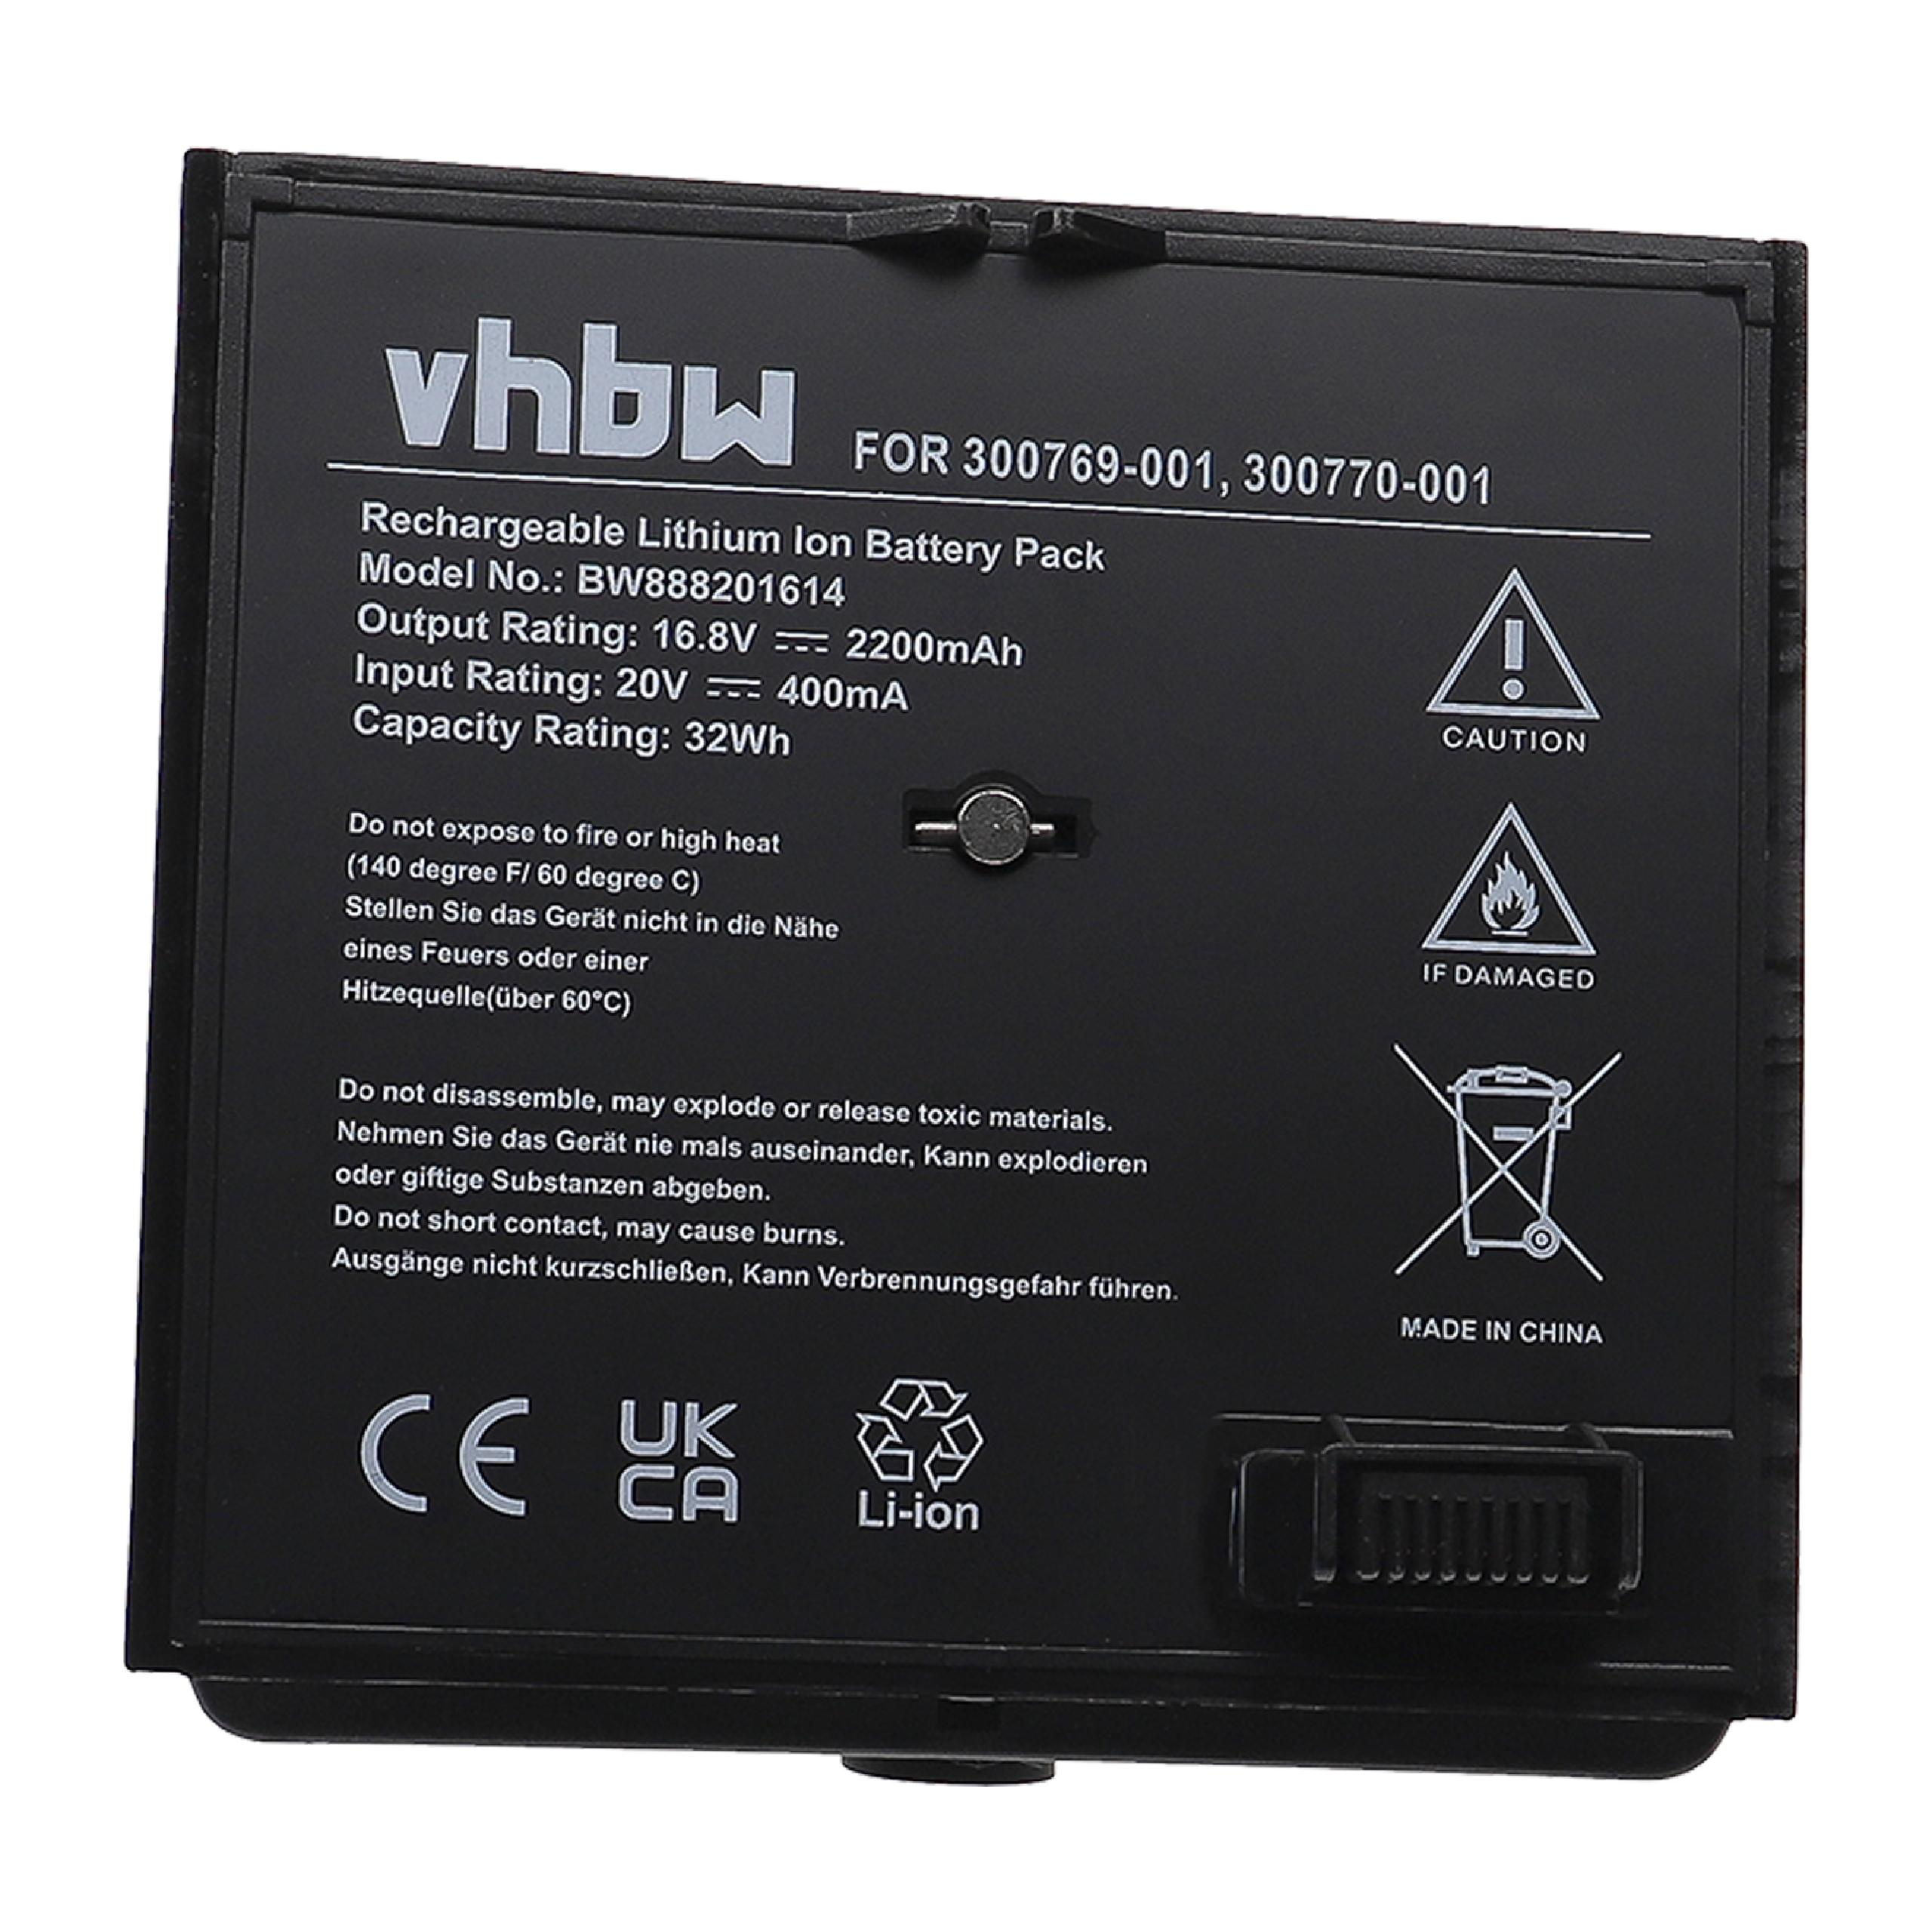 SoundLink VHBW Akku Air kompatibel 2200 mit Li-Ion - Lautsprecher, Bose Volt, 16.8